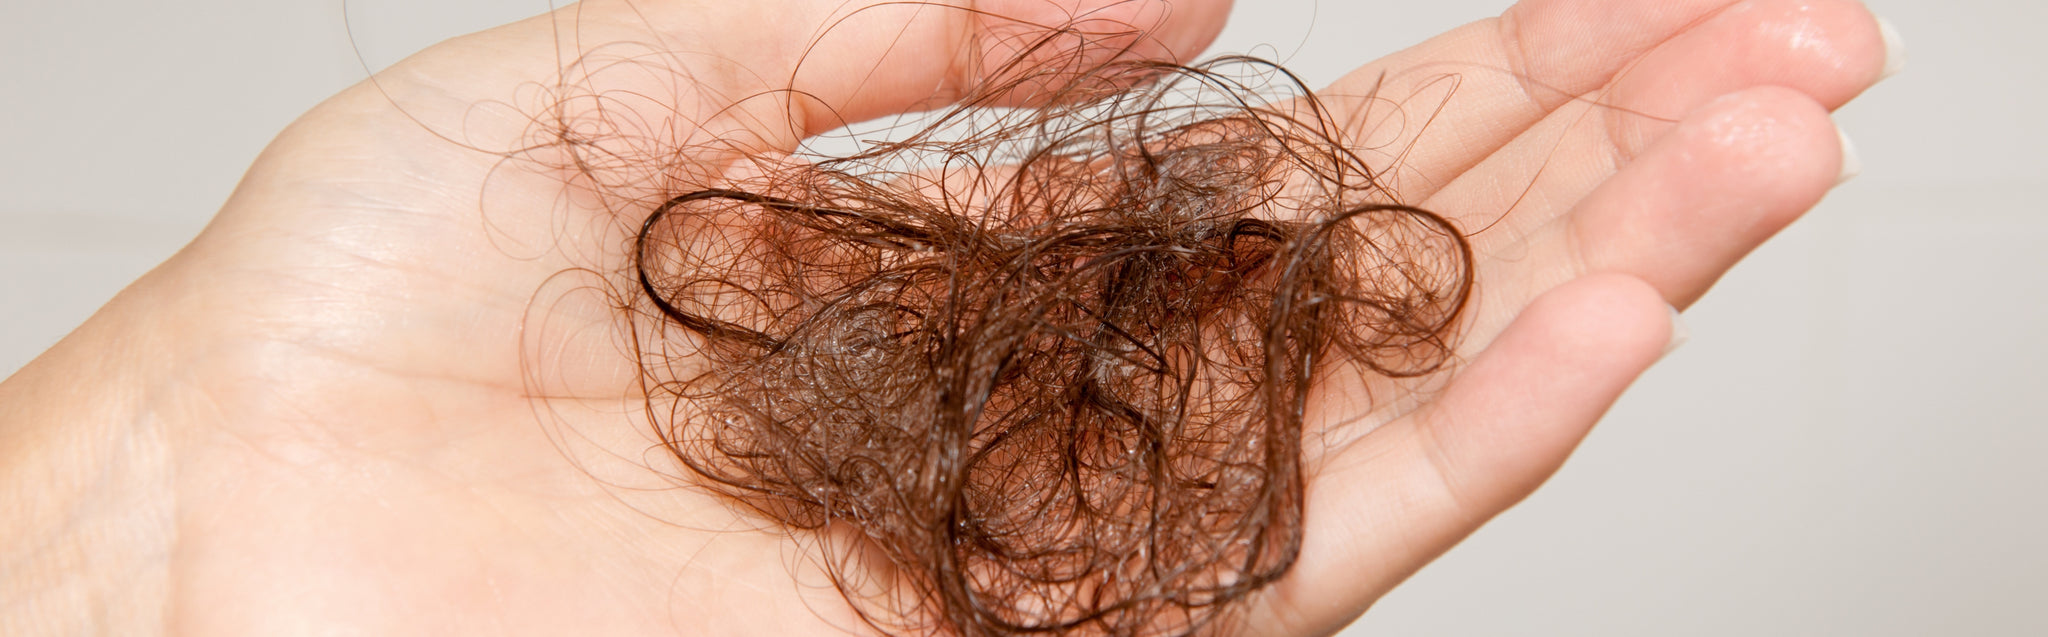 Perte de cheveux topbrush